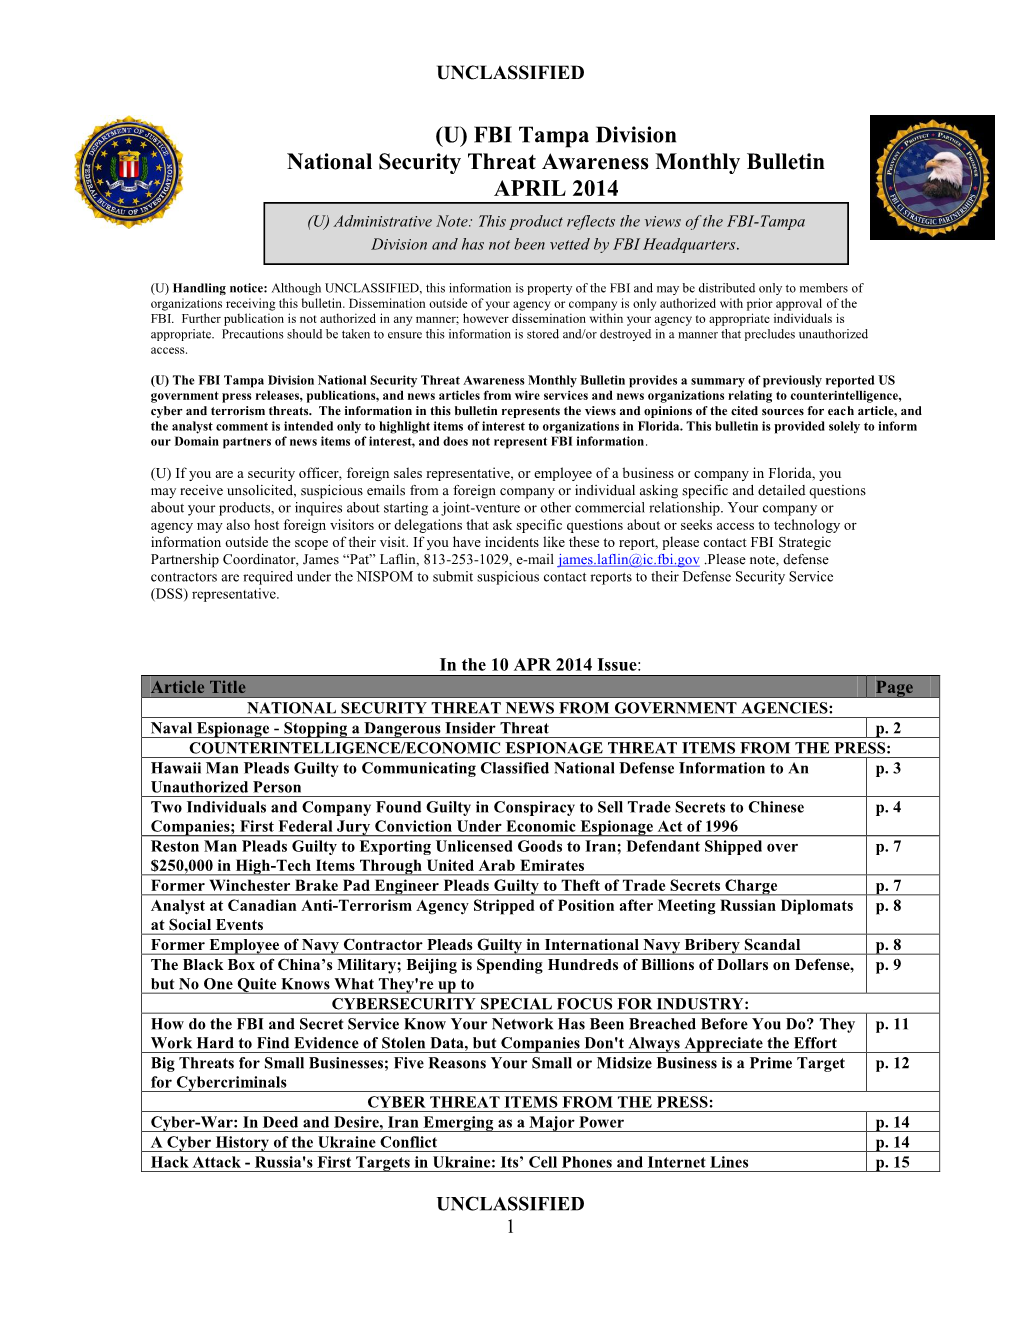 National Security Threat Awareness Monthly Bulletin